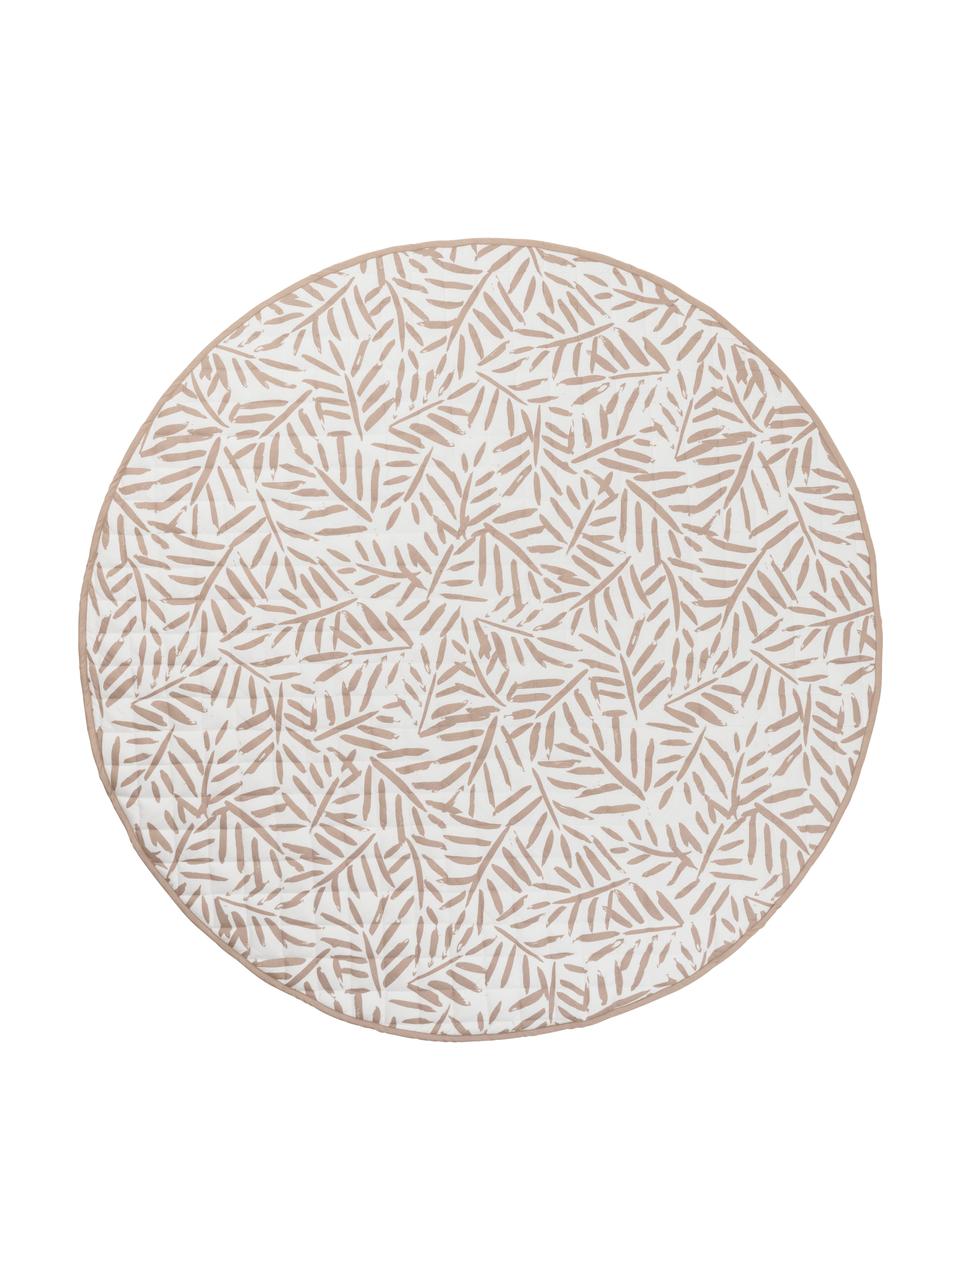 Tappeto da gioco reversibile rosa Seashell, Rivestimento: 100% cotone Imbottitura, Rosa, bianco, Ø 133 cm